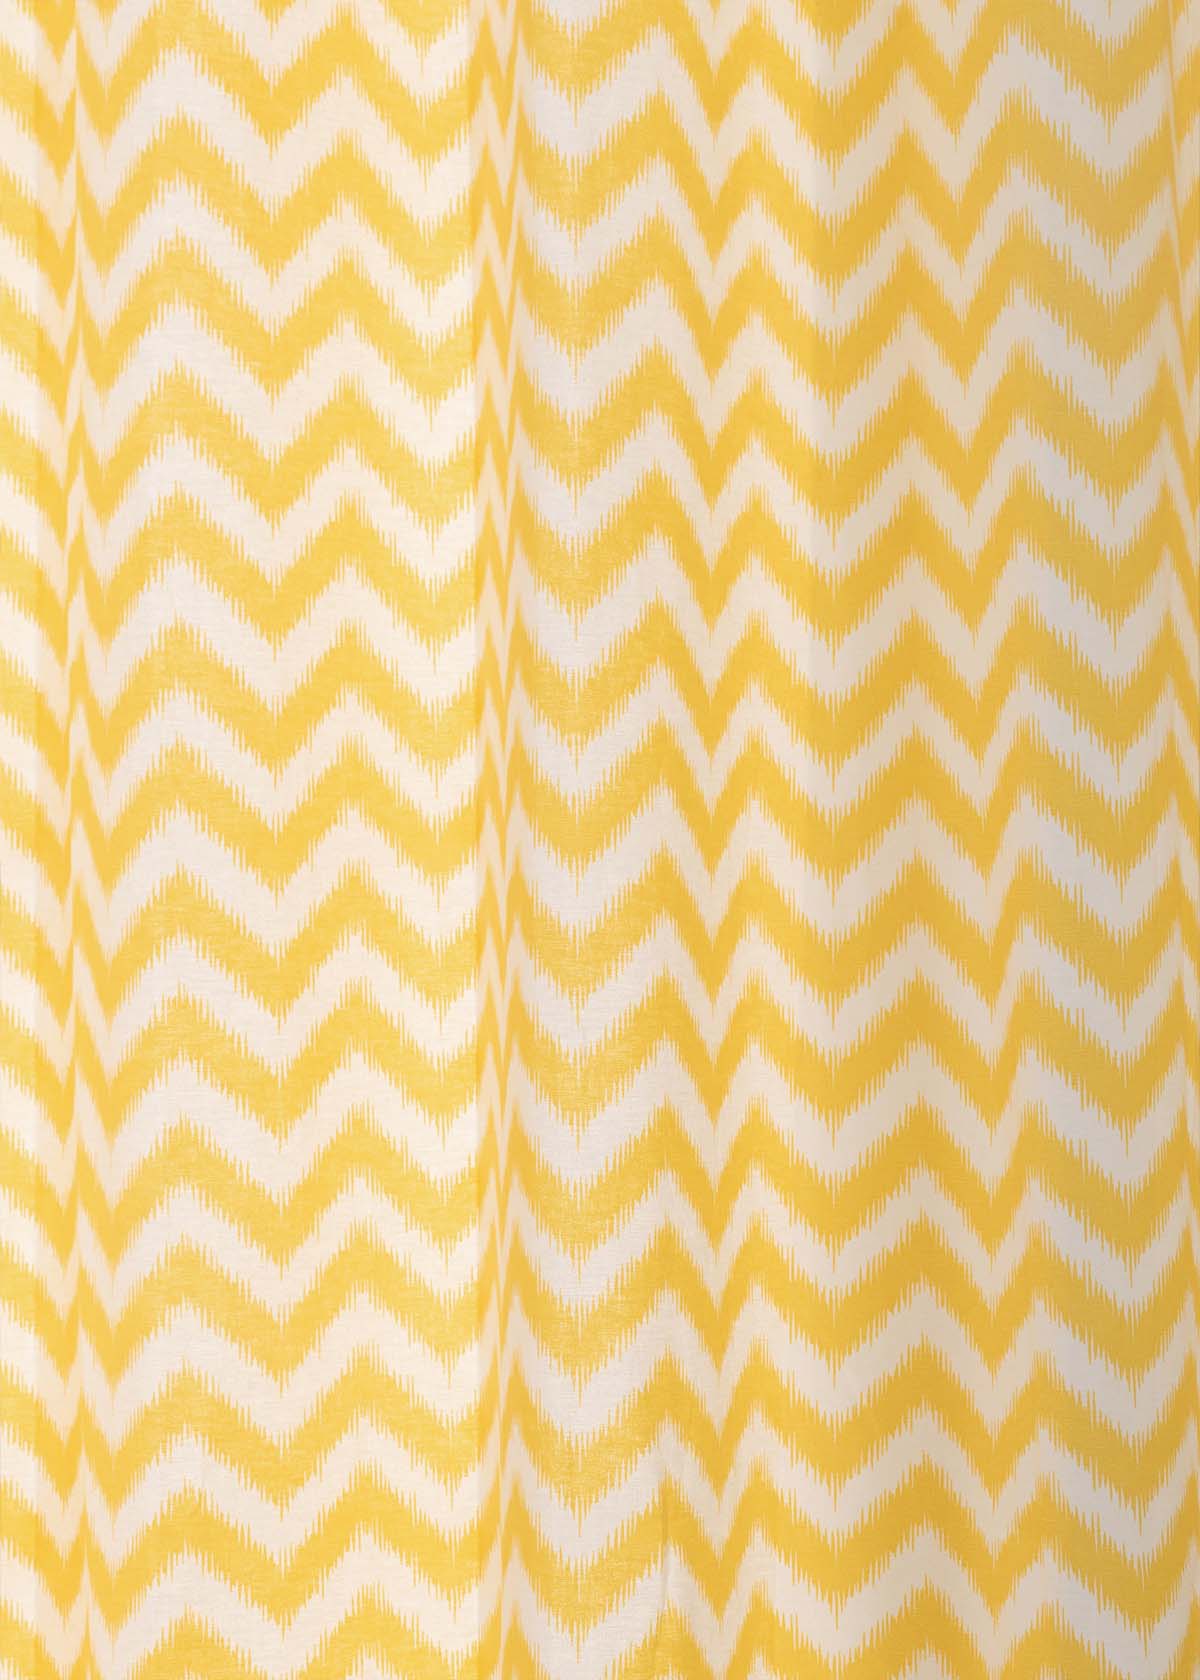 Ikat chevron printed cotton Fabric - Yellow